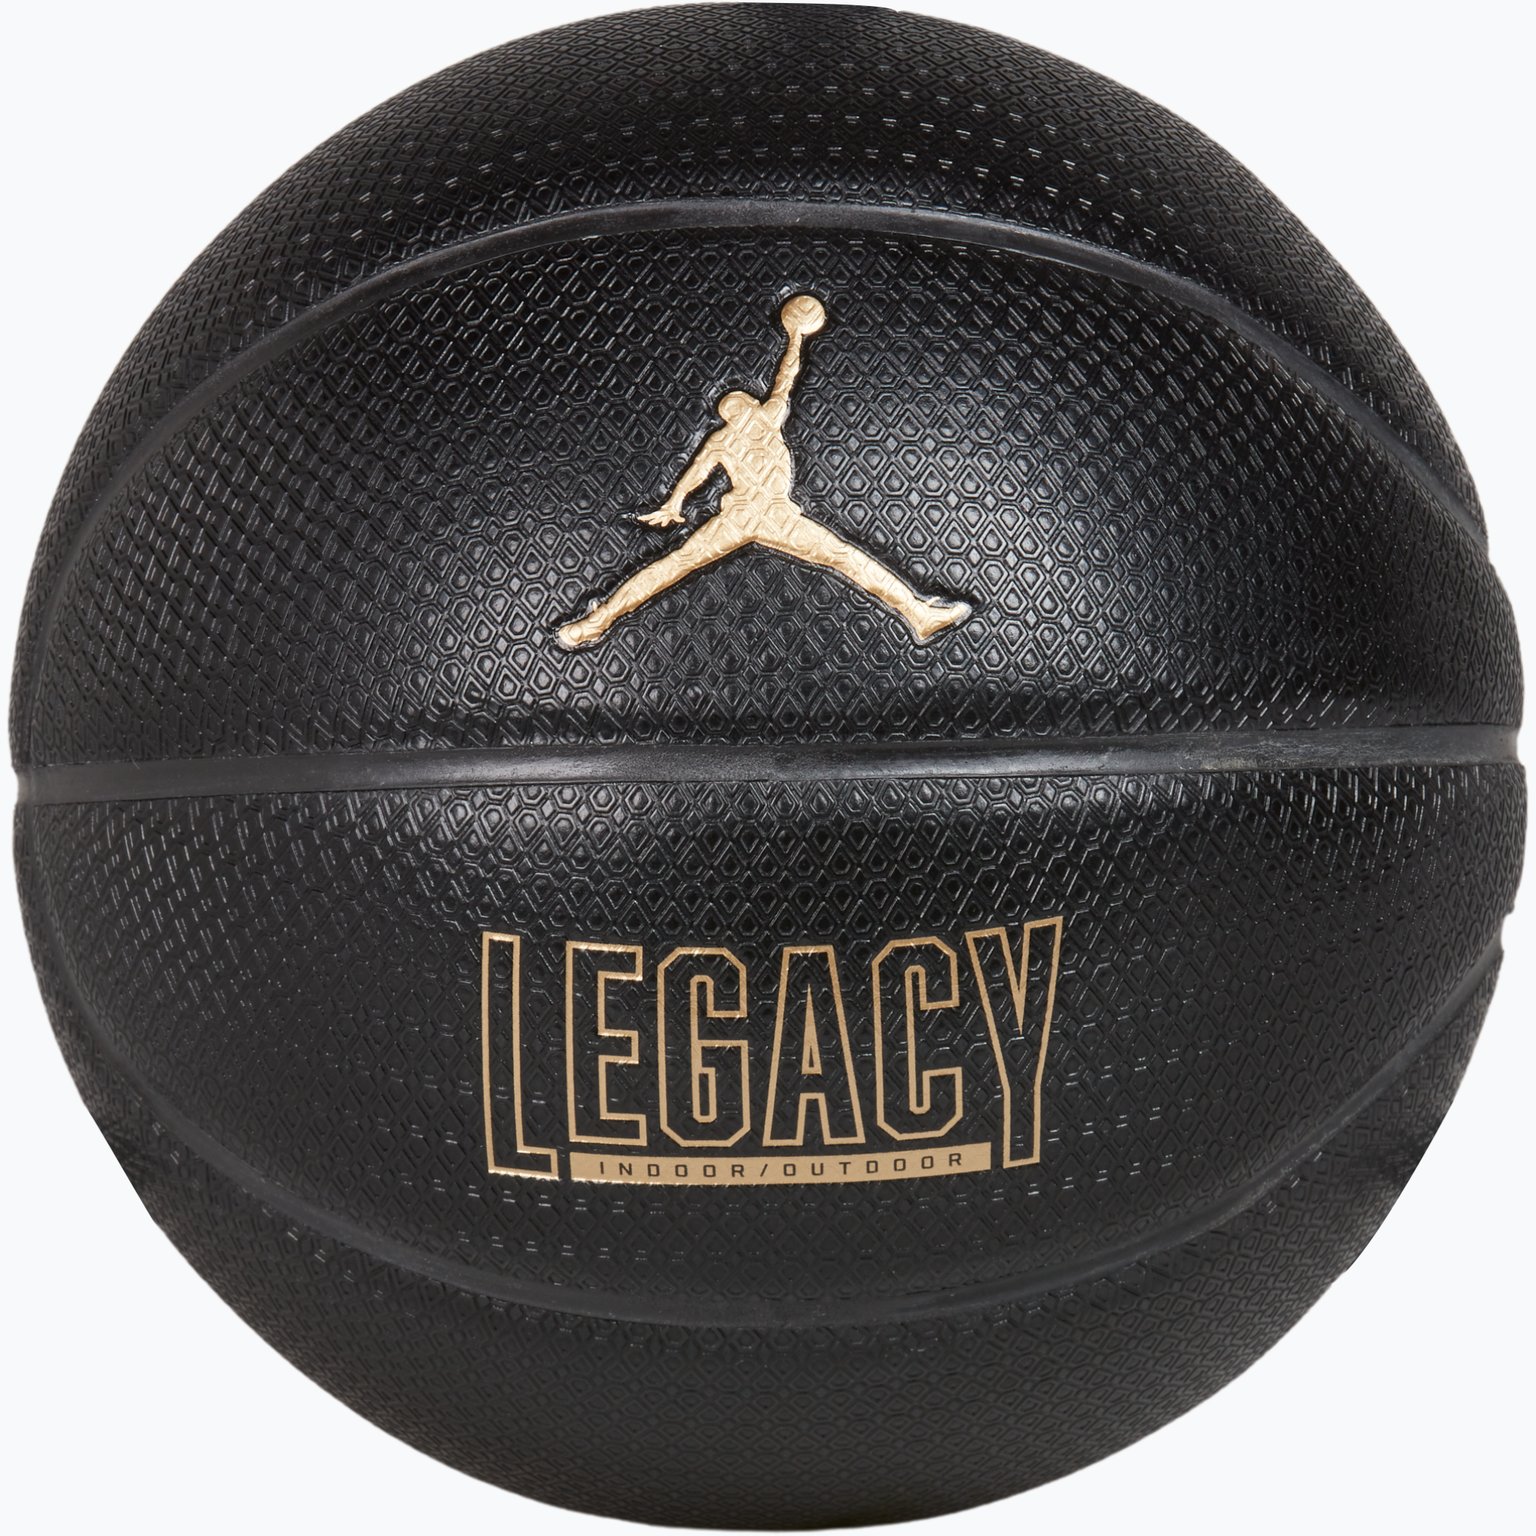 Jordan Legacy 2.0 basketboll